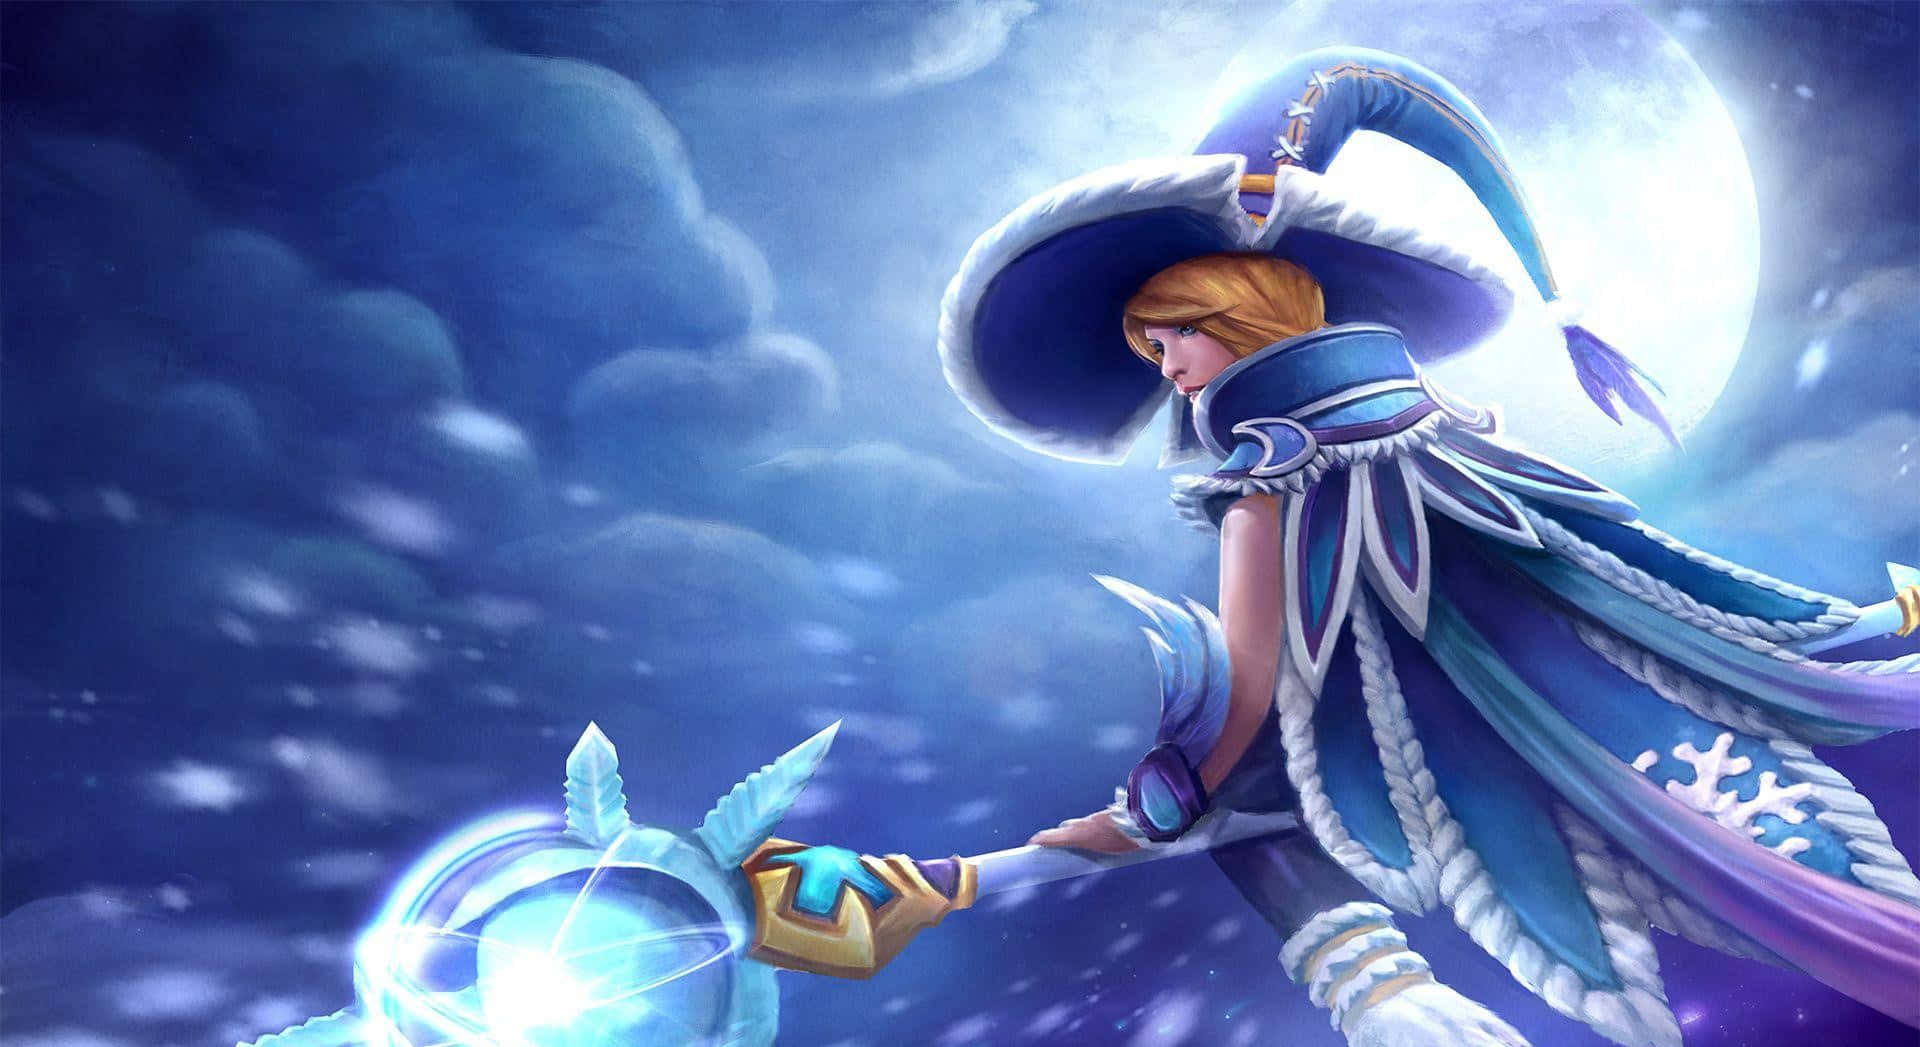 Enchanting Crystal Maiden from Dota 2 in a Winter Wonderland Wallpaper